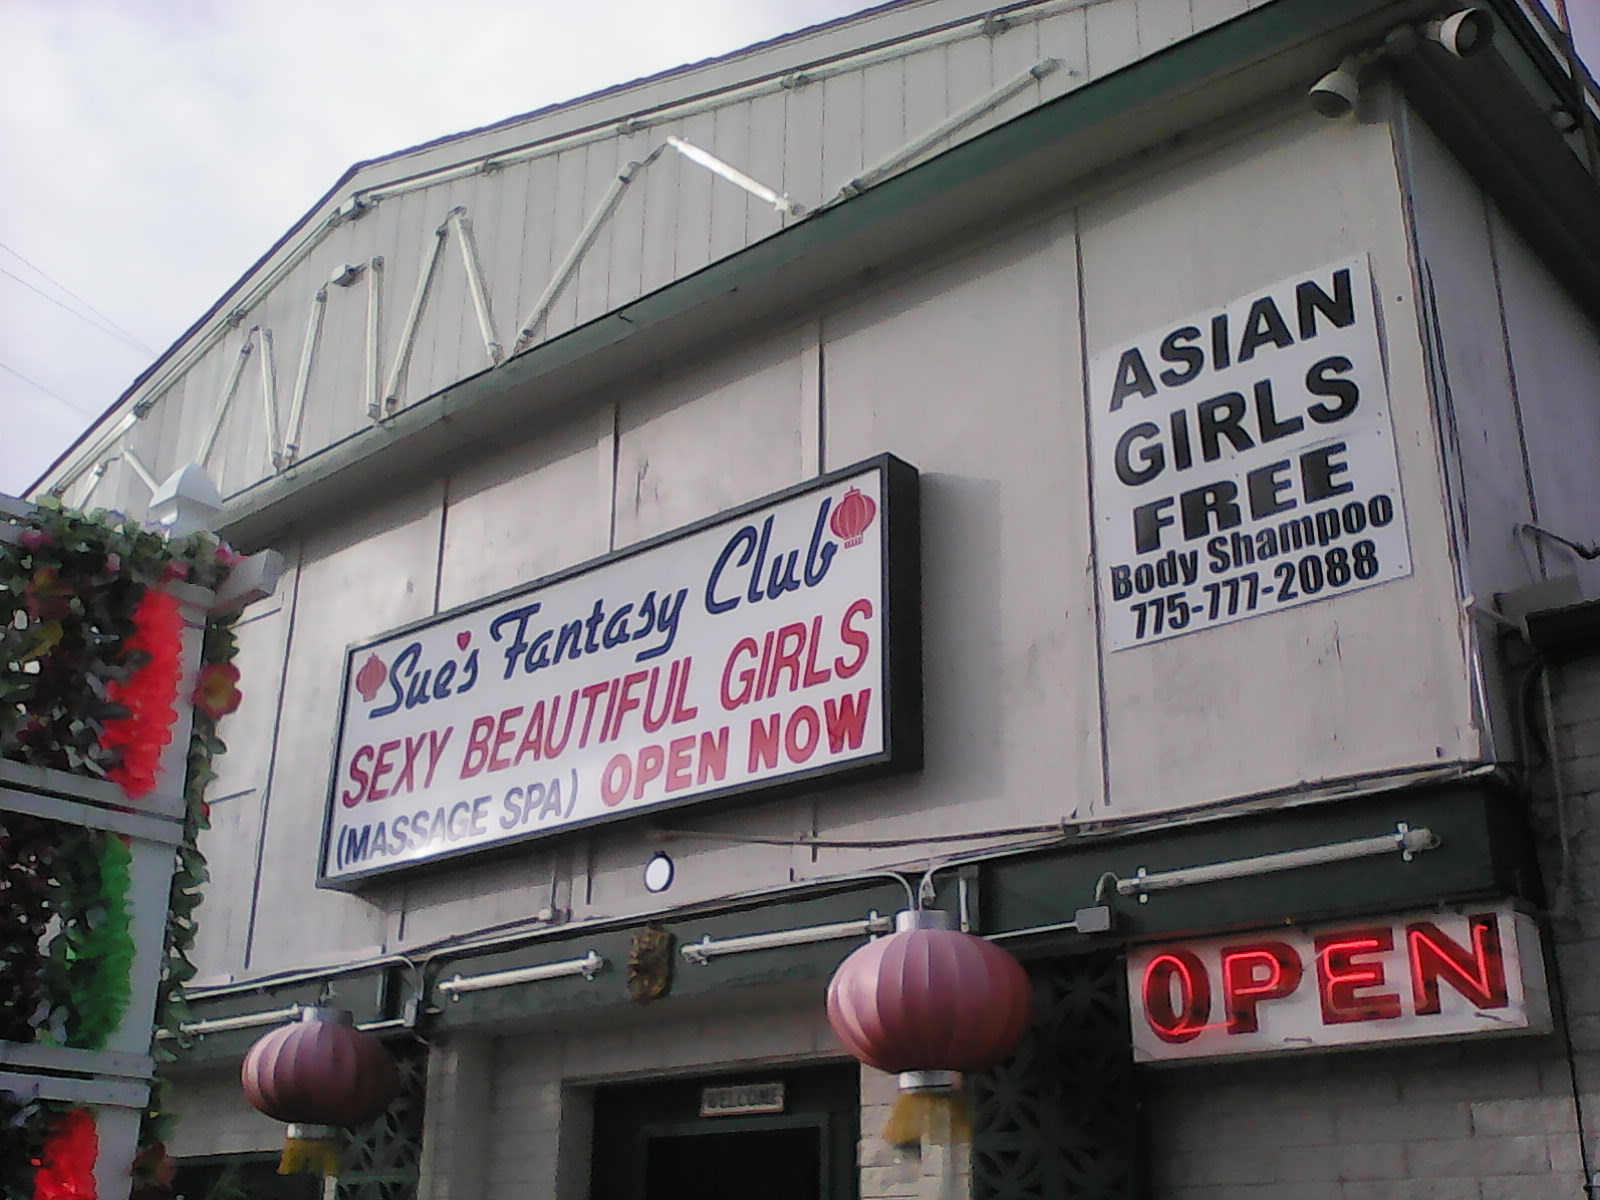 Sue's Fantasy Club - Adult Entertainment Club in Elko